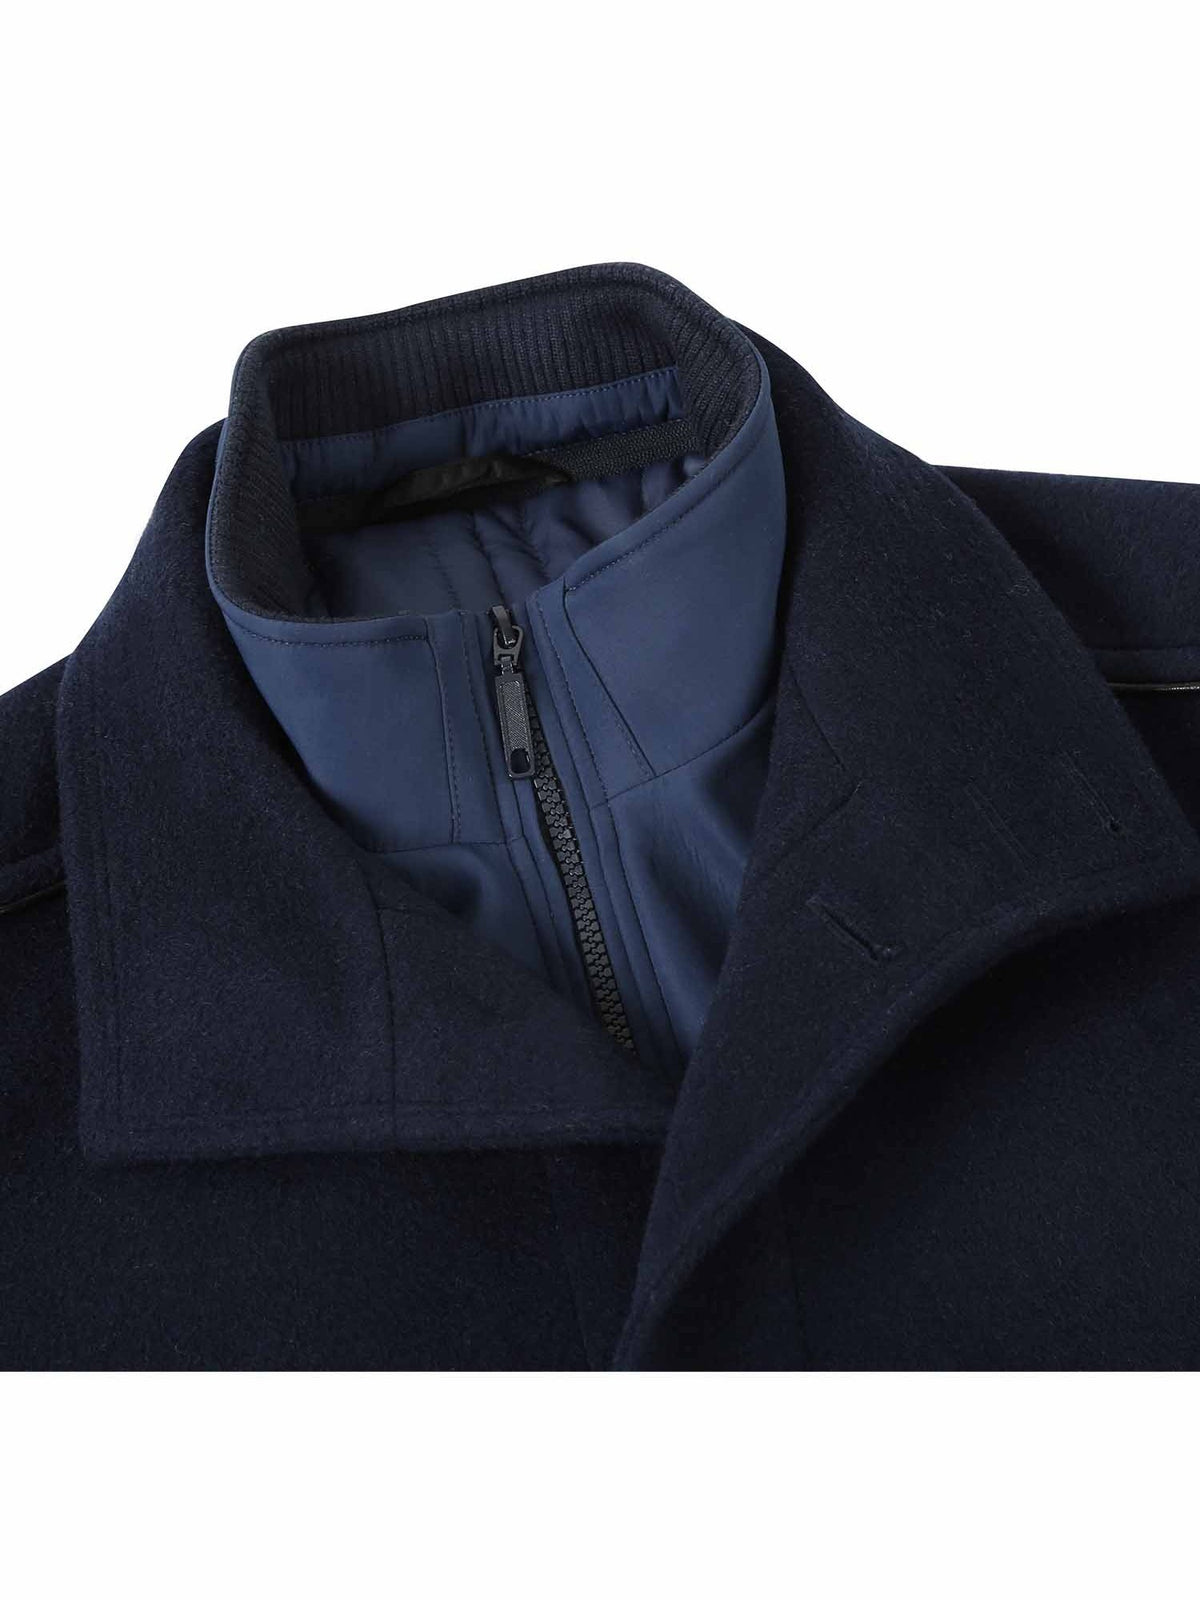 Raphael Solid Navy Wool Blend Short Coat